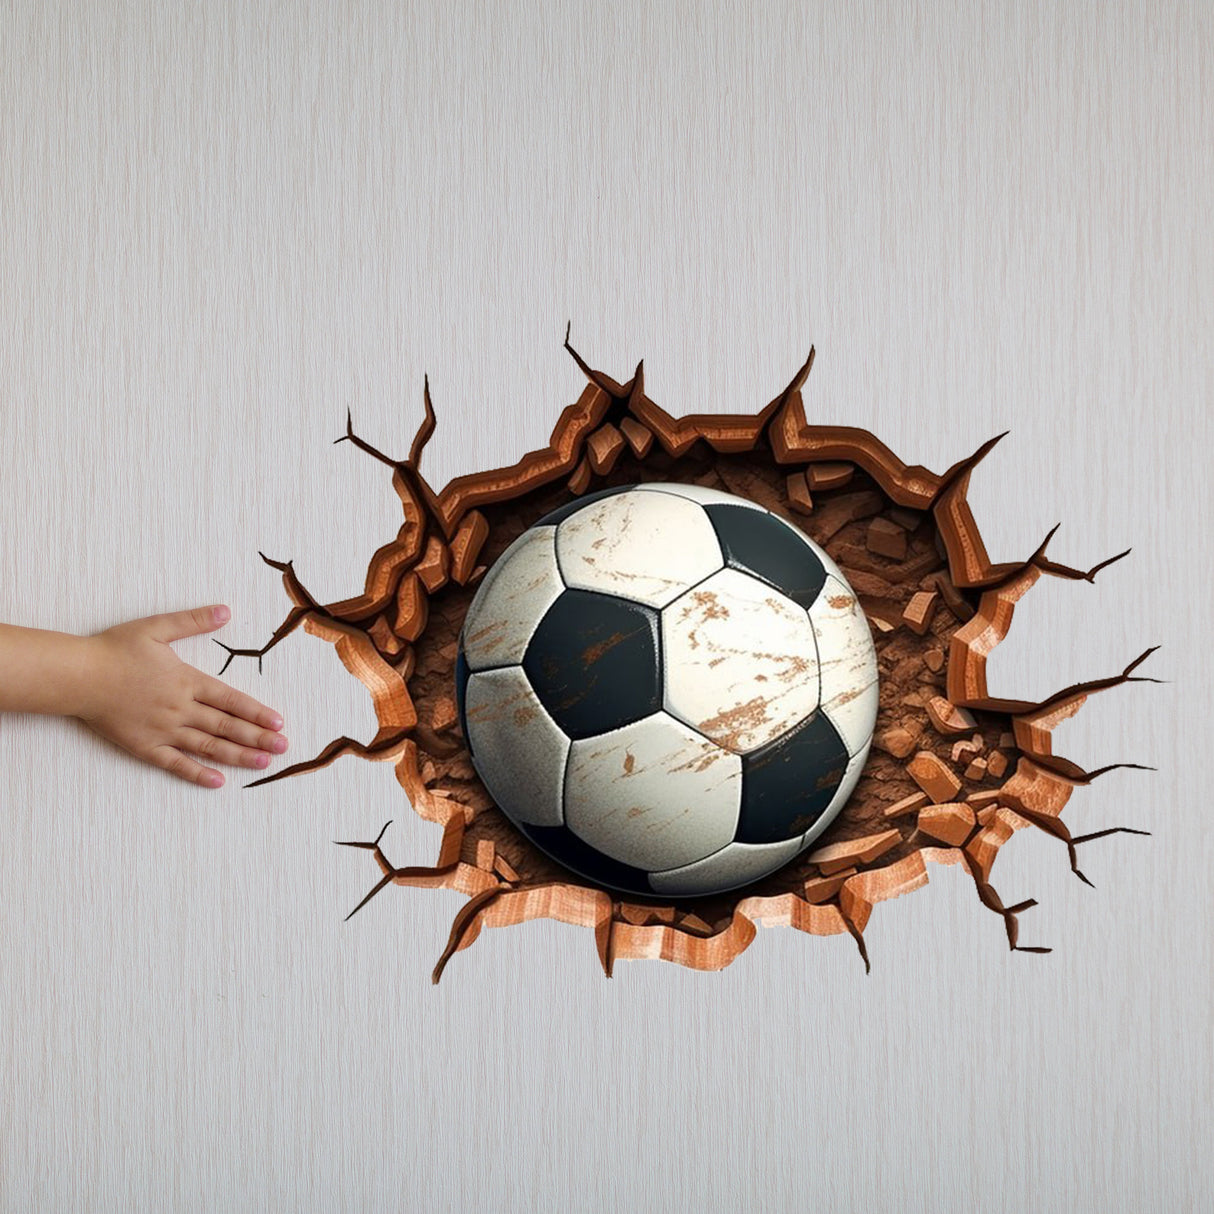 3D Football Wall Decal - Boys Room Breakthrough Sticker - Sporty Soccer Art - Video Game Theme Mural - Teen Bedroom Decor Gift - Many sizes